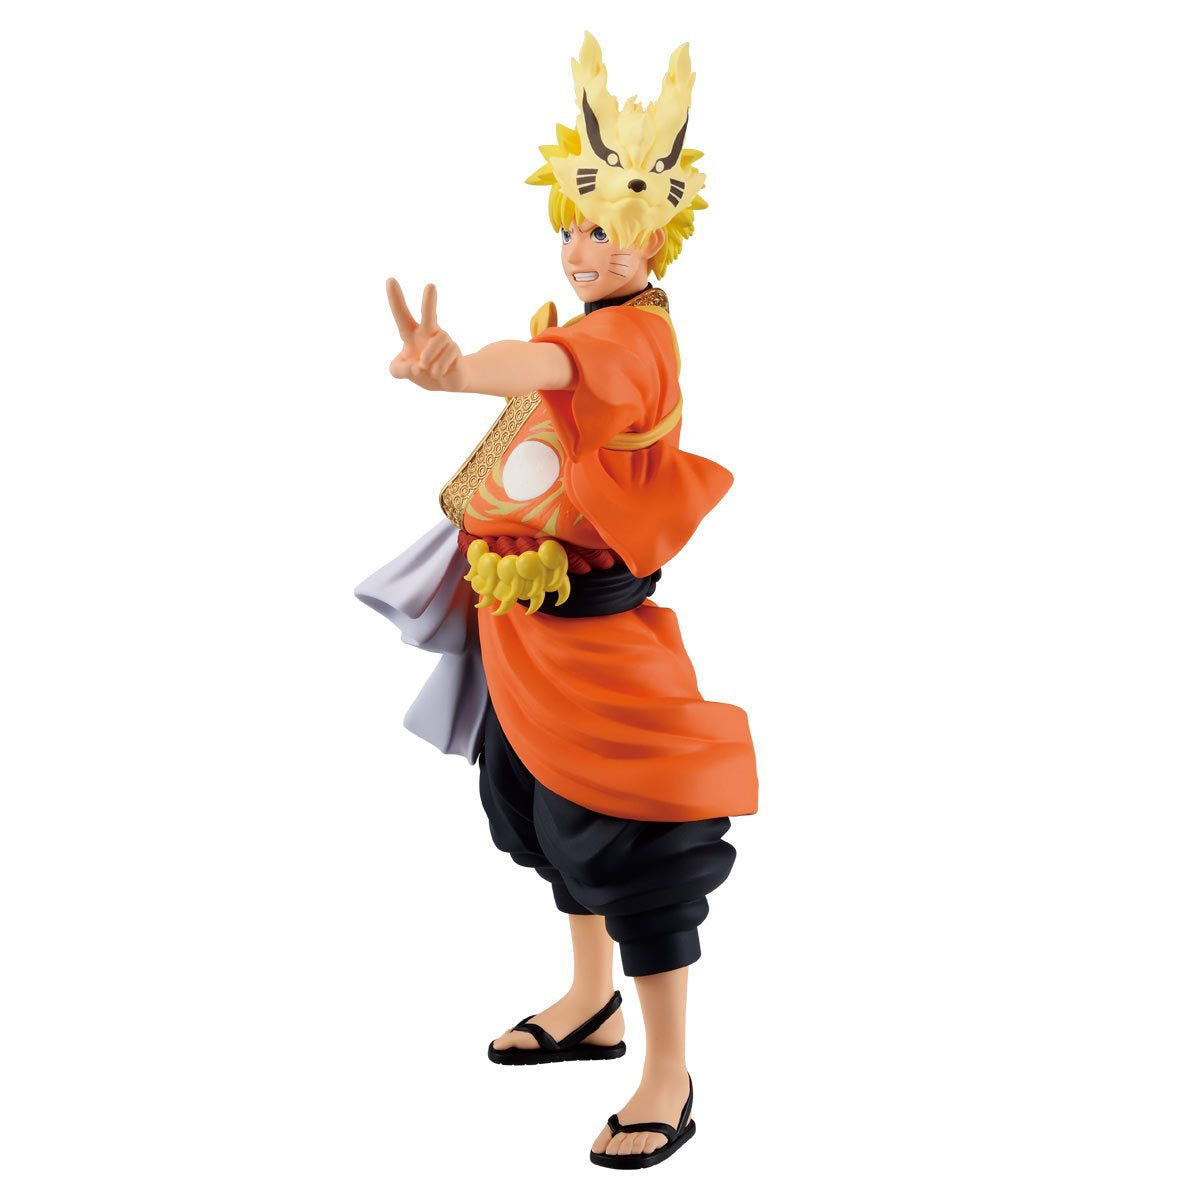 Naruto - Naruto Uzumaki  20th Anniversary Costume Statue